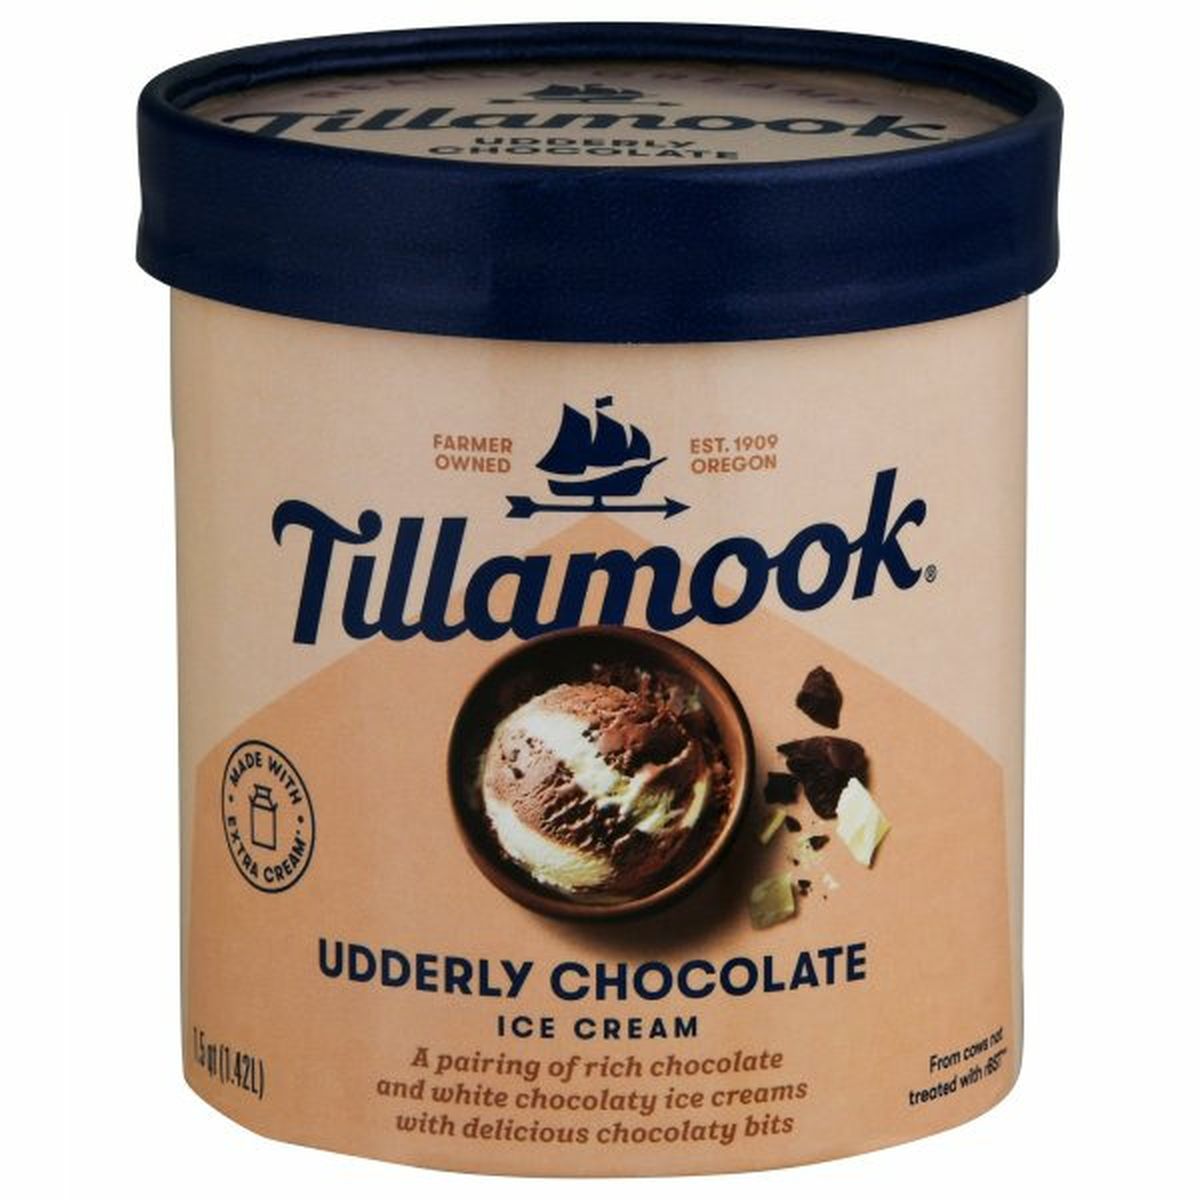 Calories in Tillamook Ice Cream, Udderly Chocolate